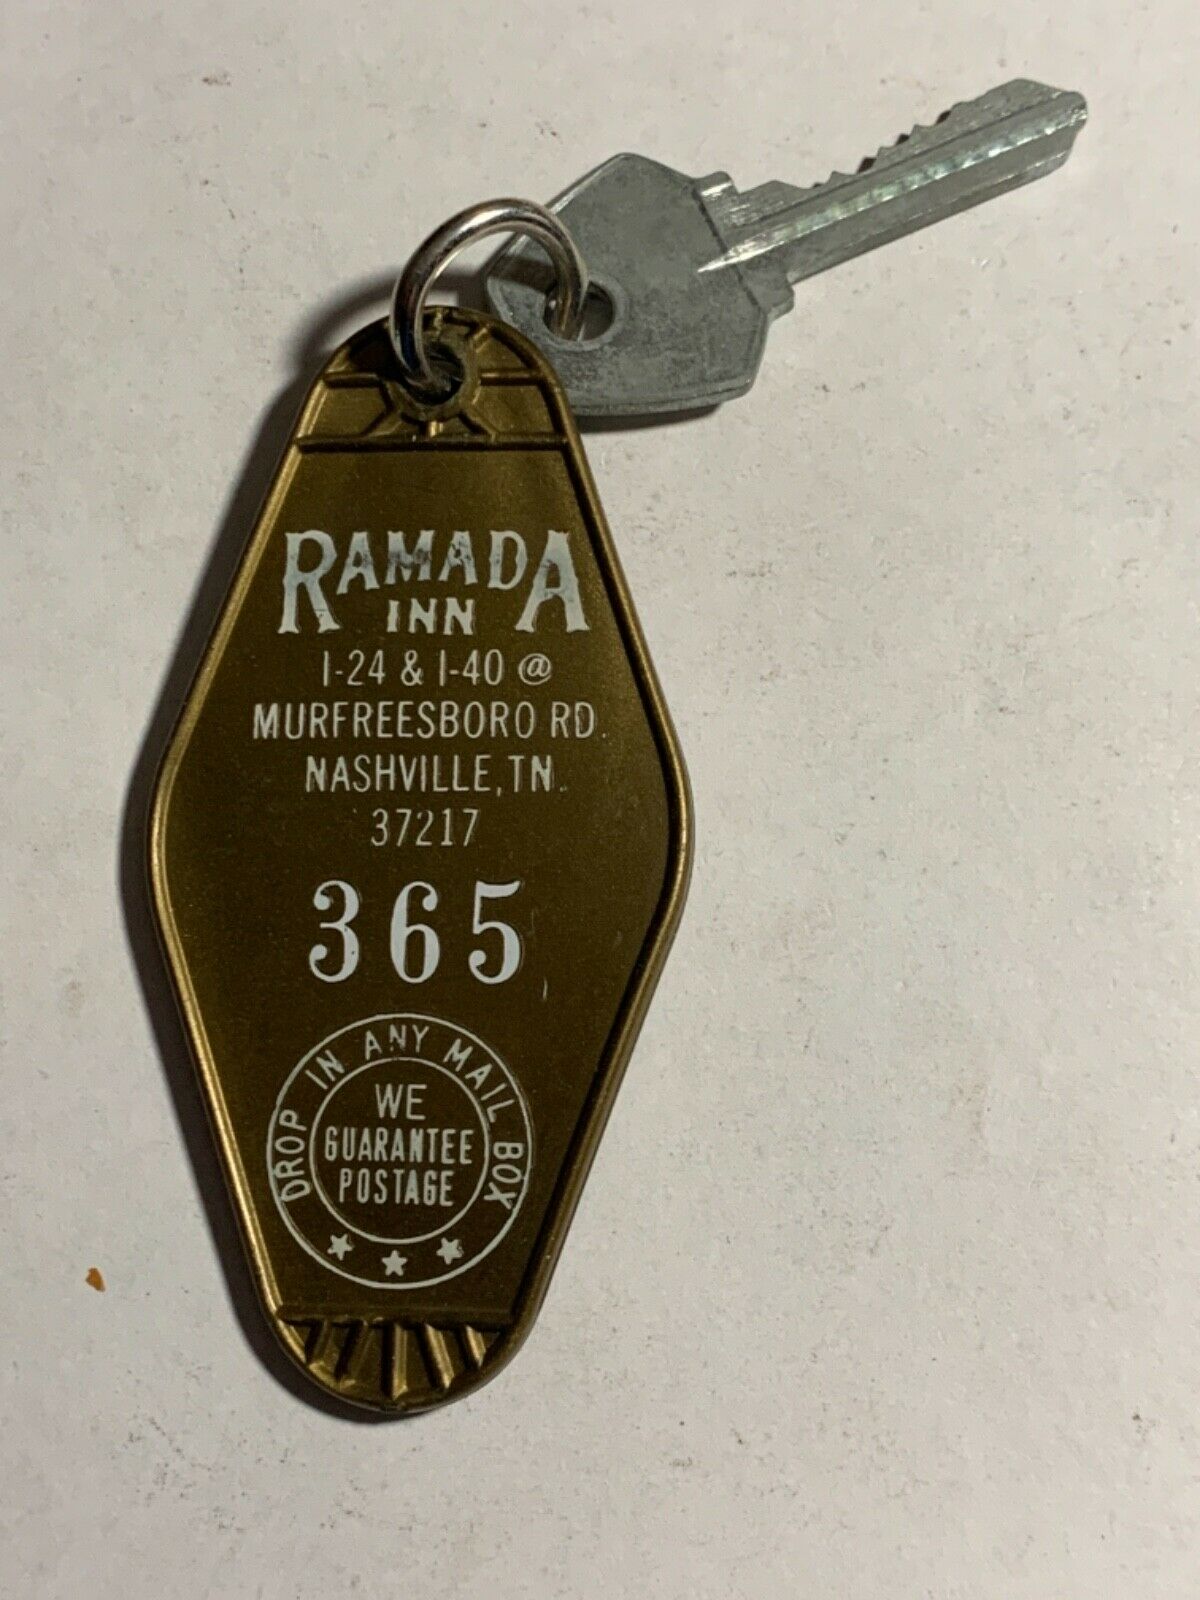 Ramada Inn Motel Hotel Room Key Fob With Key Nashville Tennessee #365